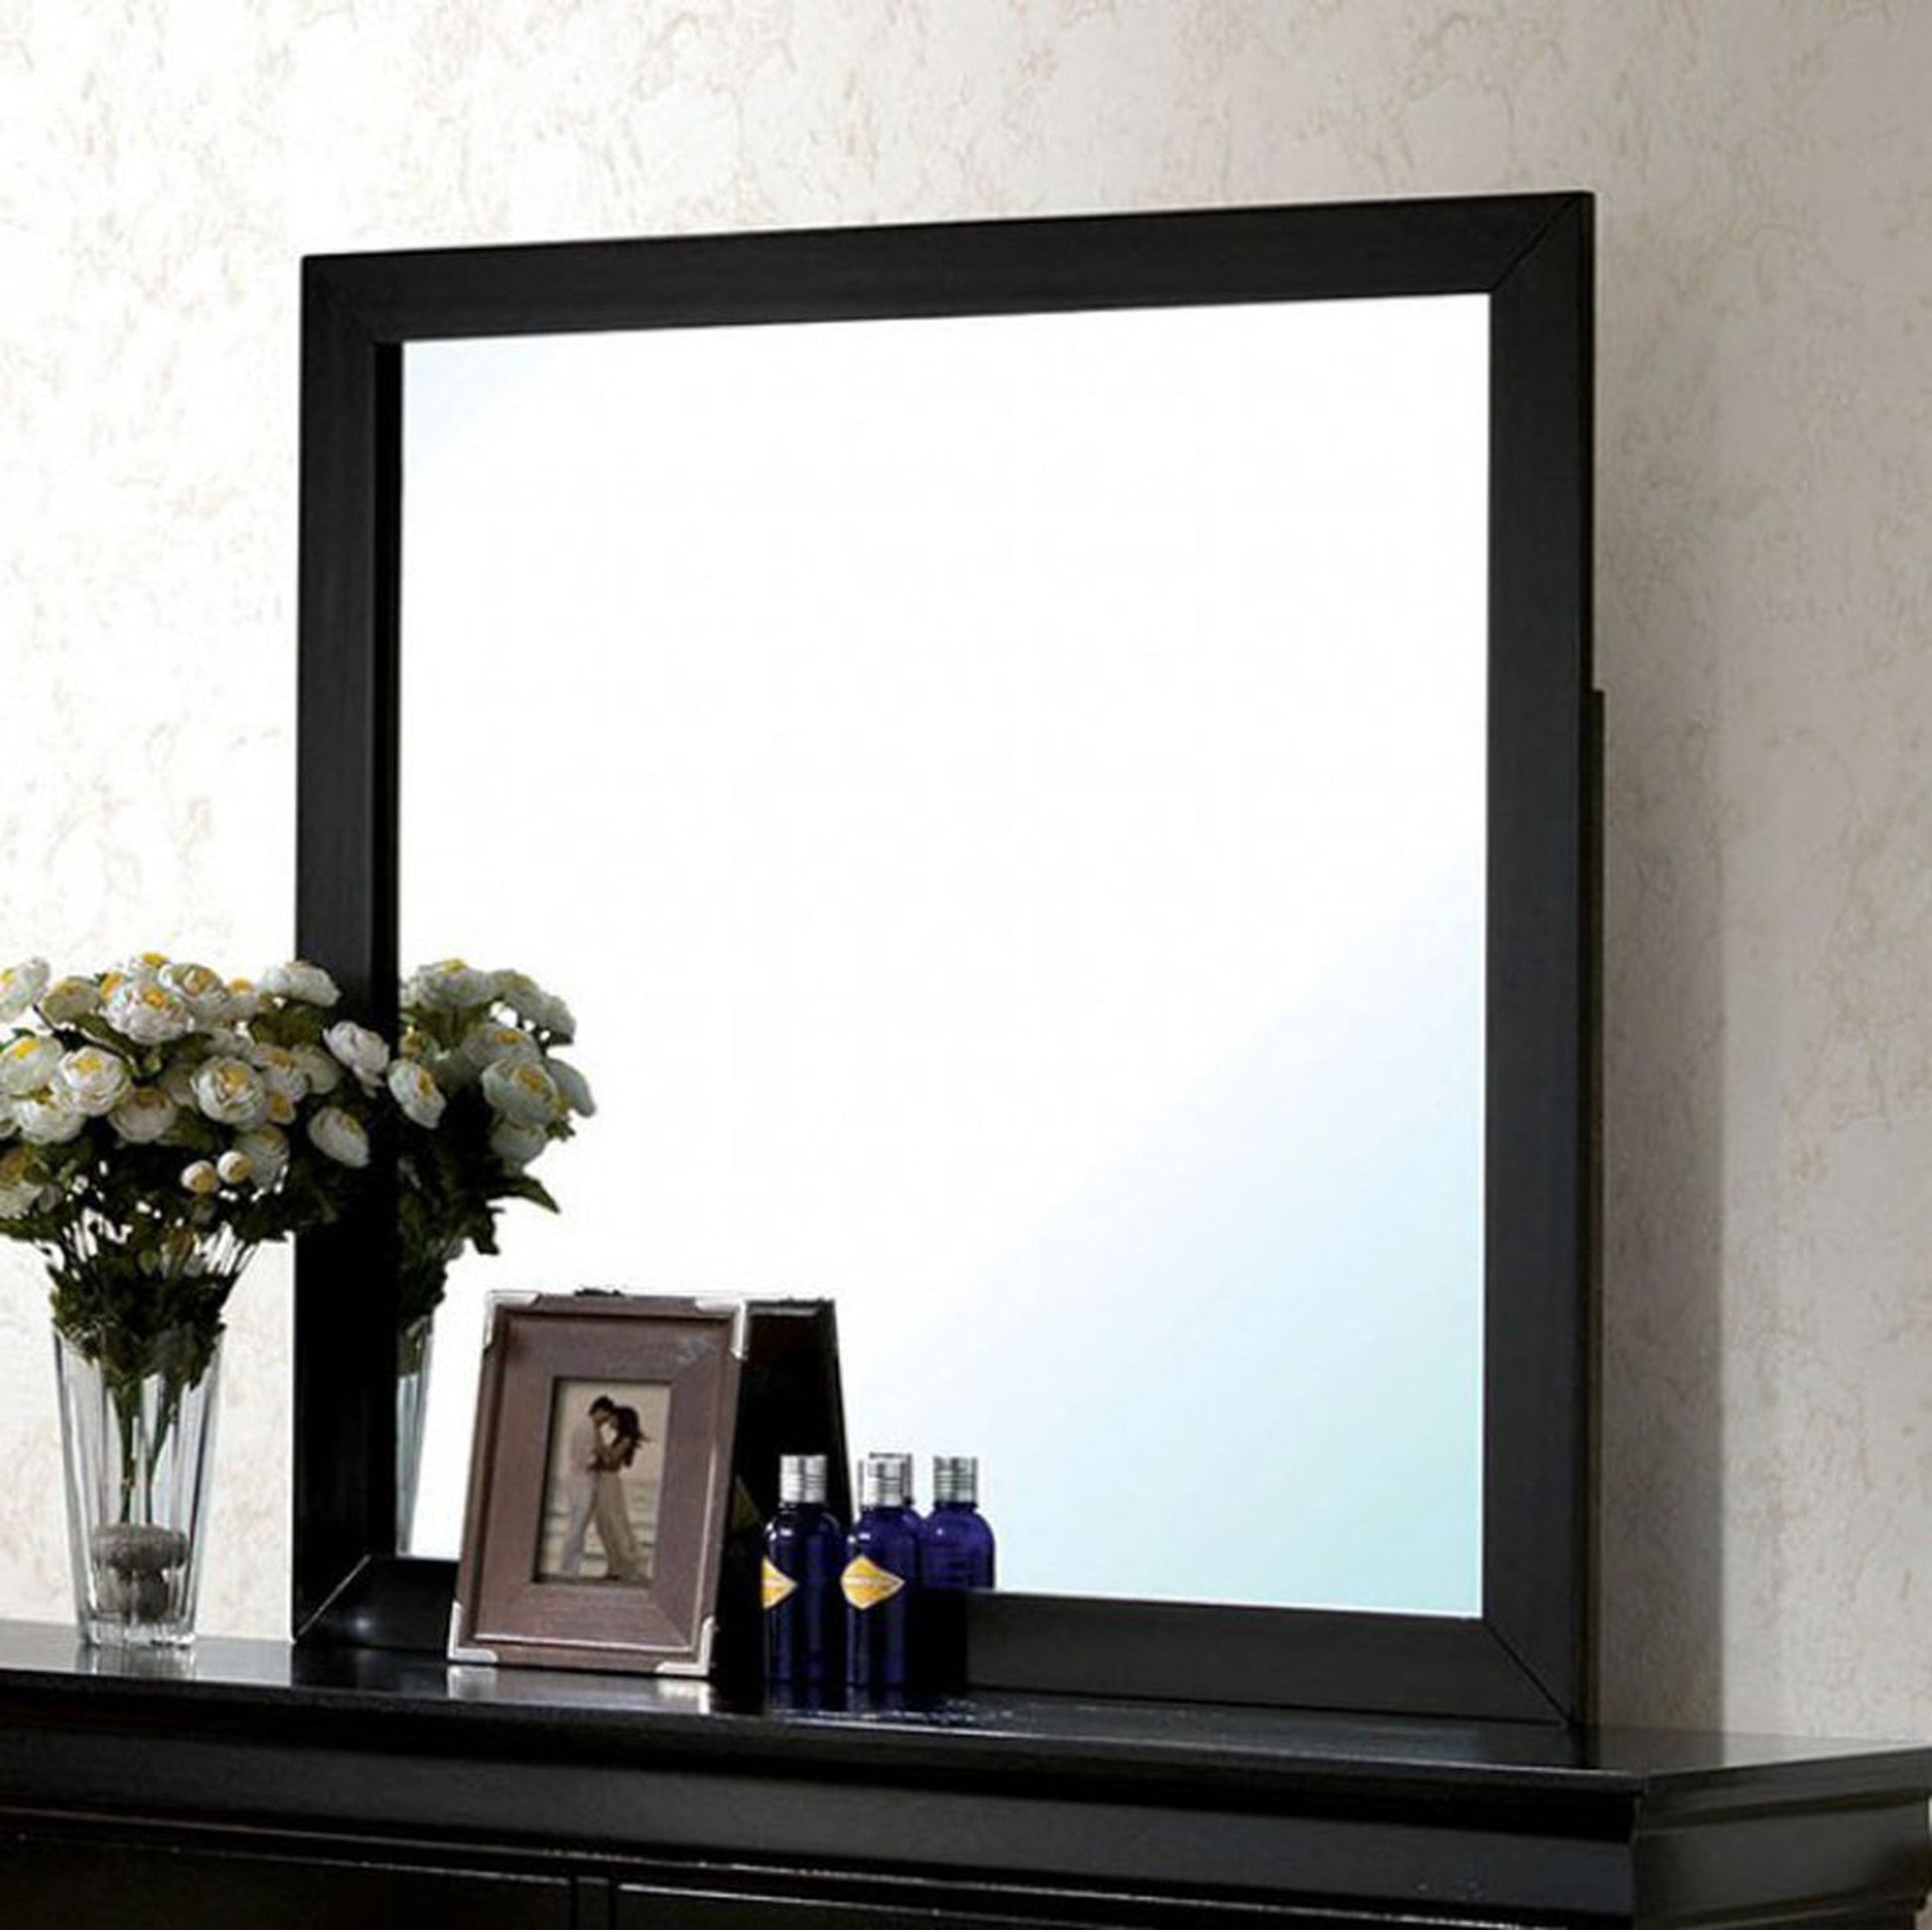 Benzara 43" Black Rectangular Wooden Framed Wall Mirror With Mounting Hardware